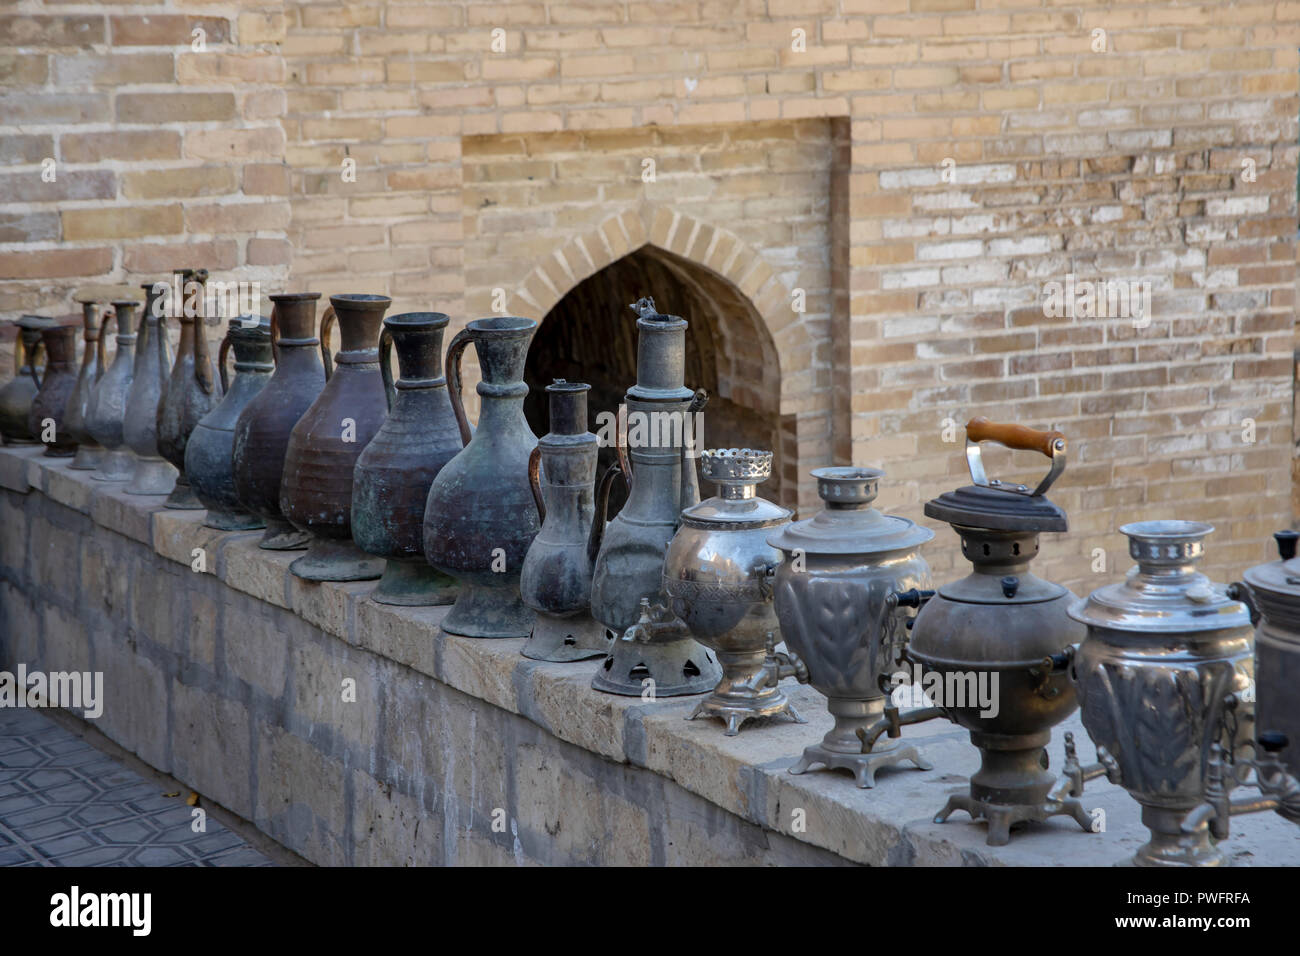 Old metal samovars and decanters on display in bazaar in Bukhara, Uzbekistan. Stock Photo